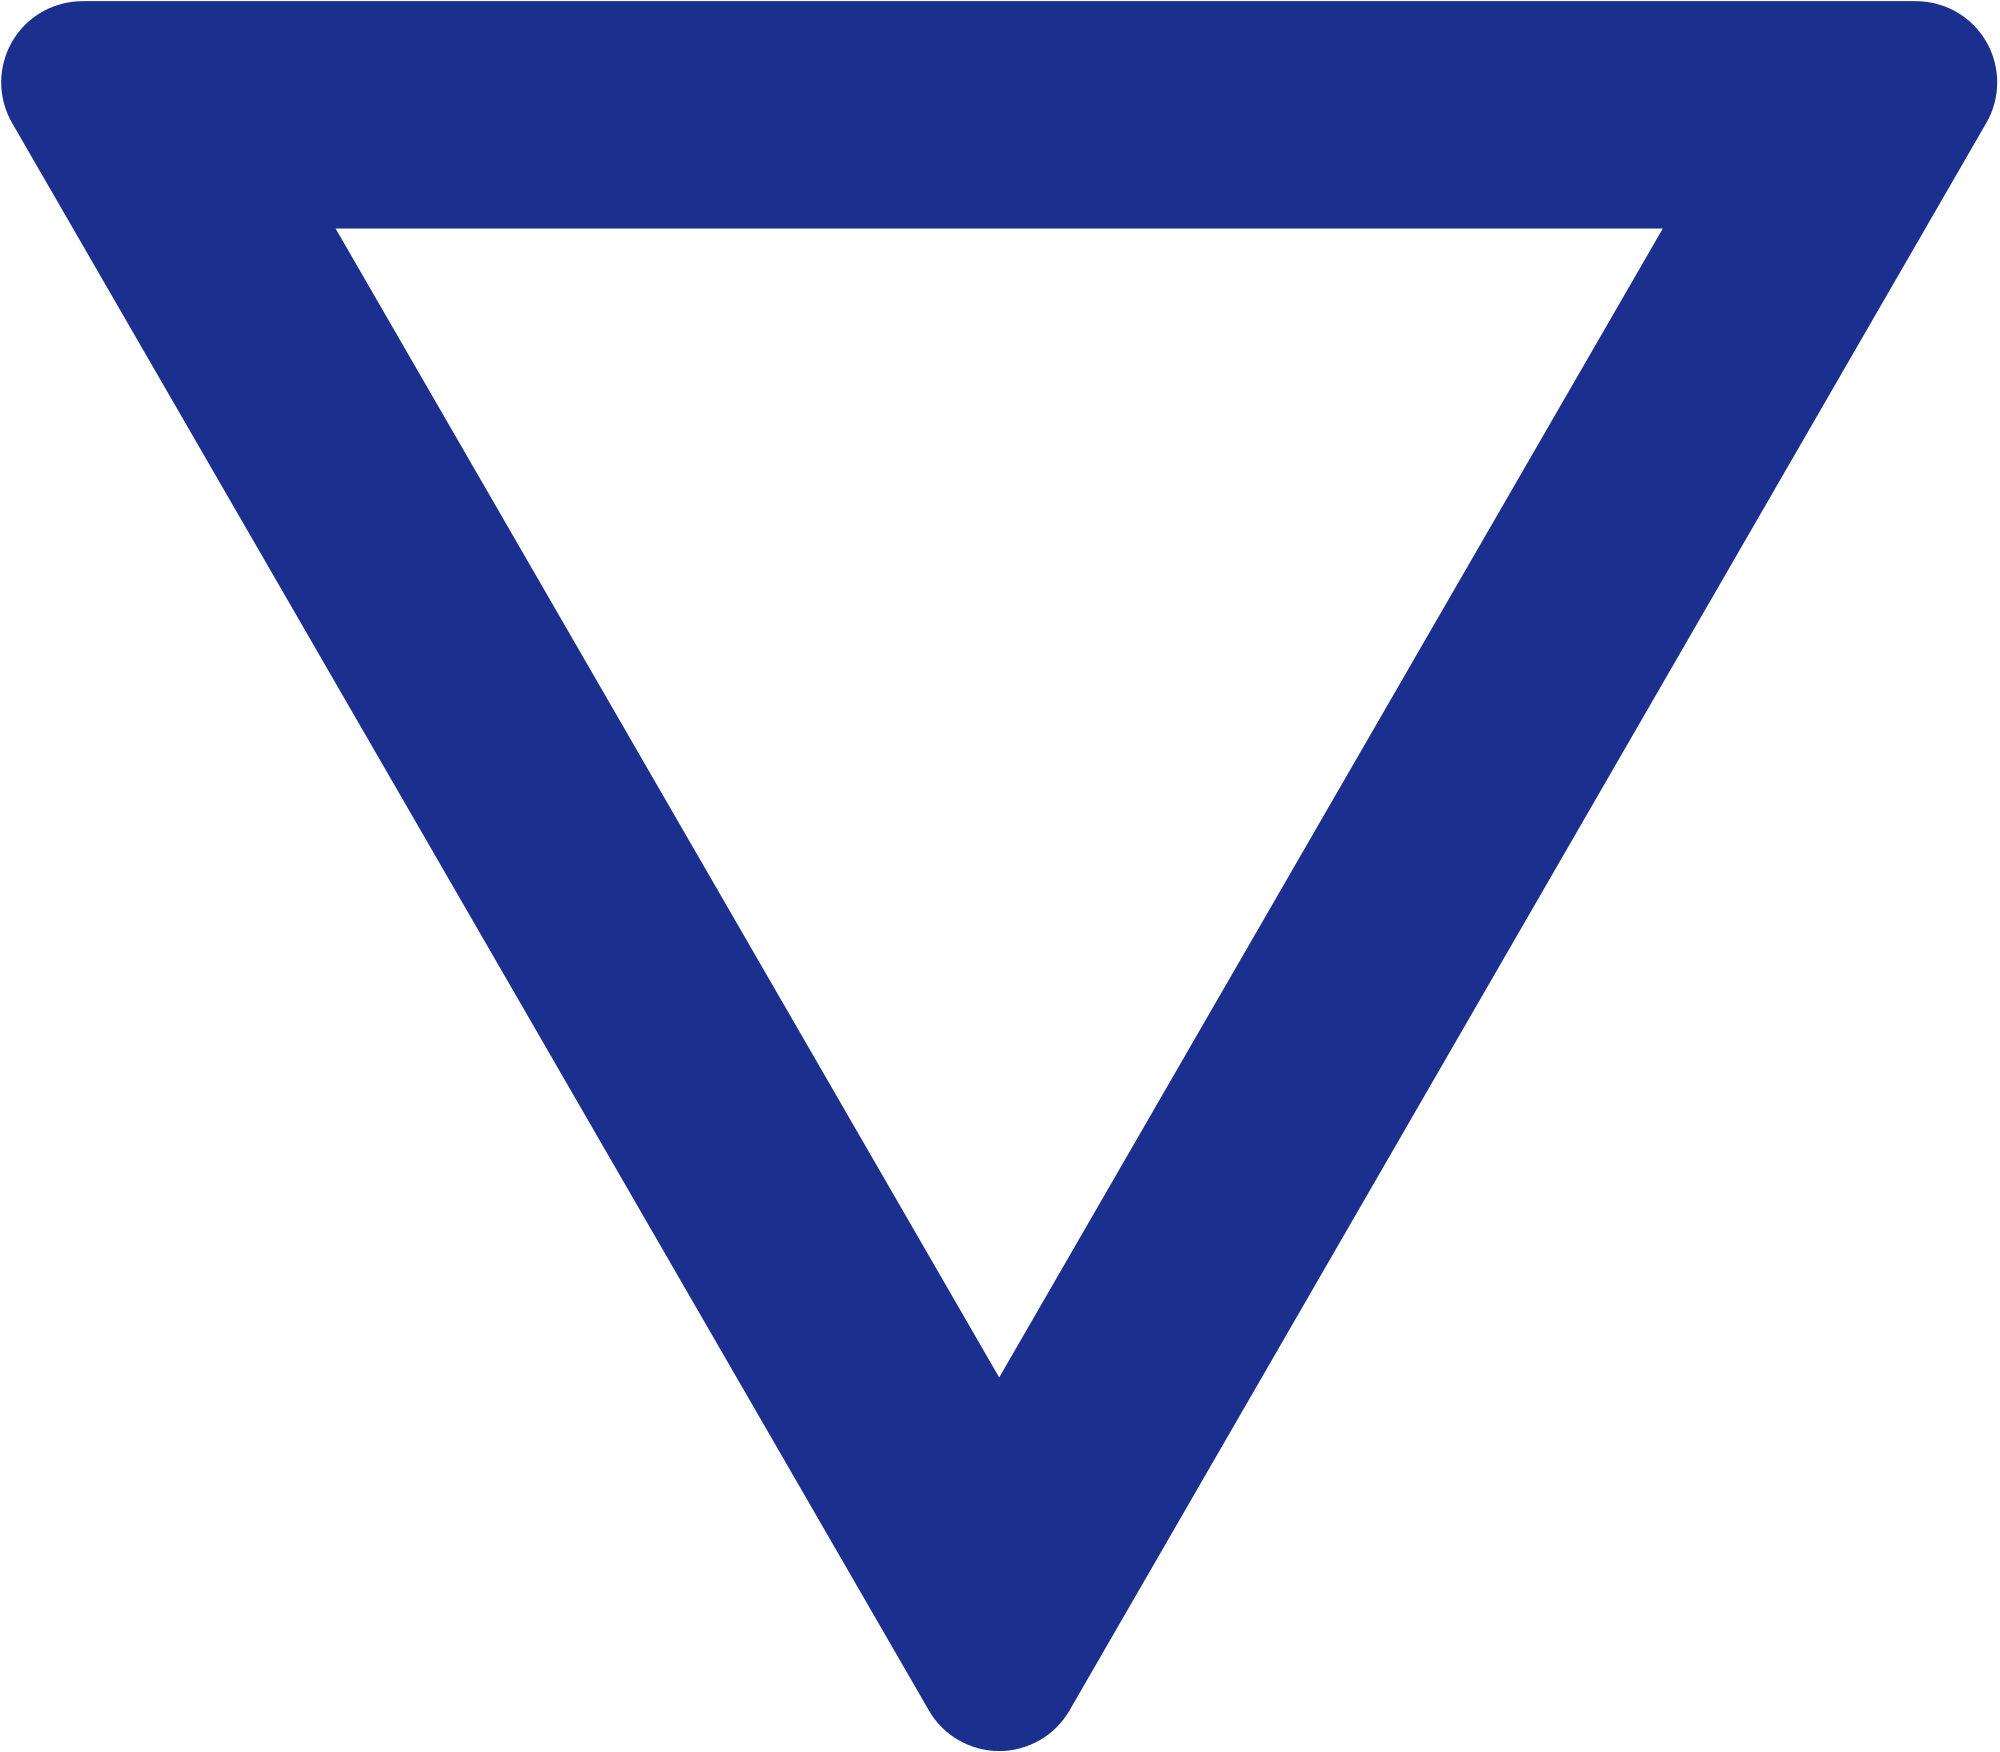 Czechoslovakia 1938 Road Sign - Blue Upside Down Triangle (2000x1752)